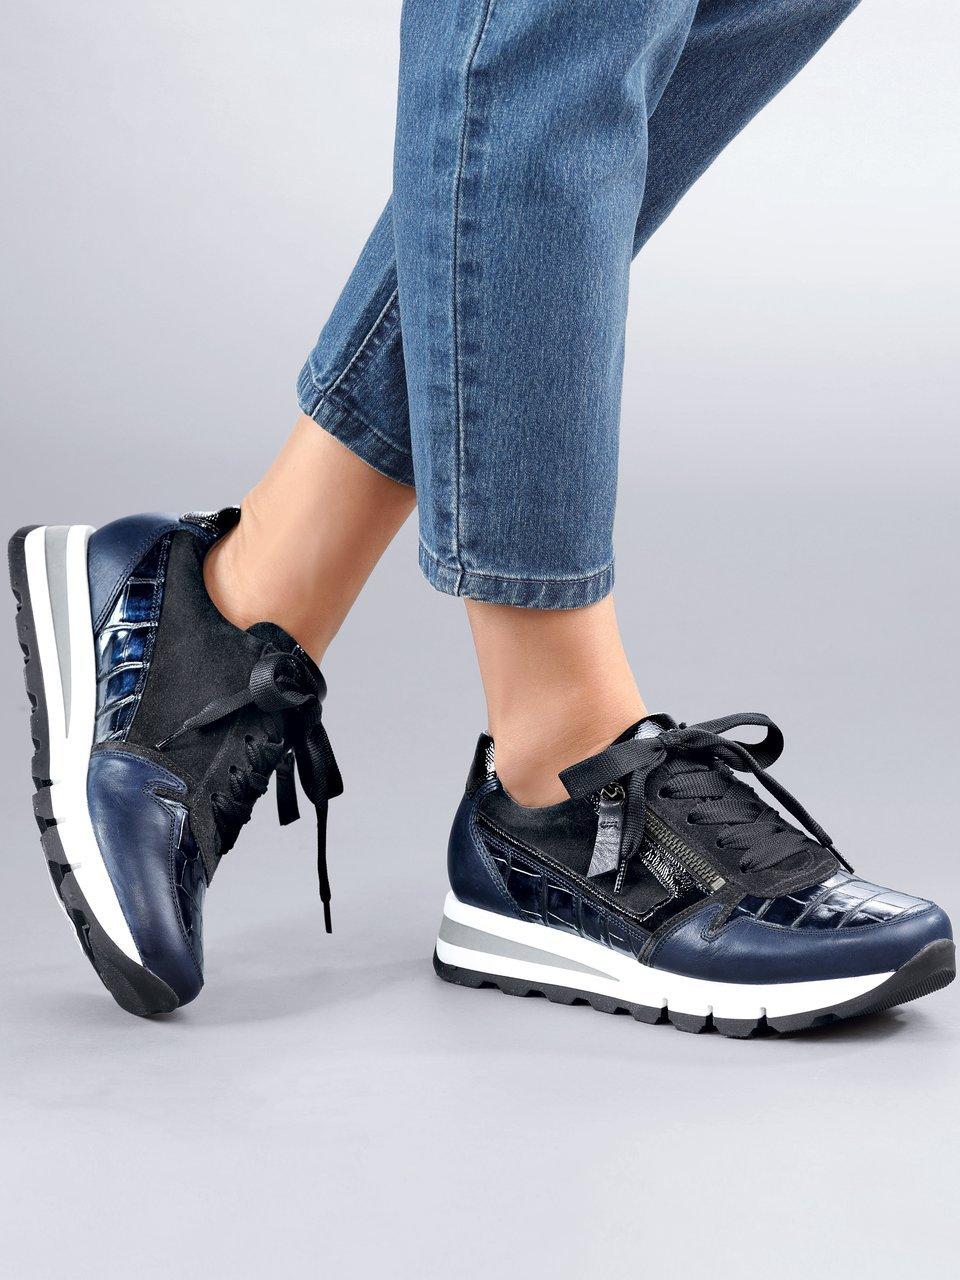 Gabor Comfort - Les sneakers 100% cuir